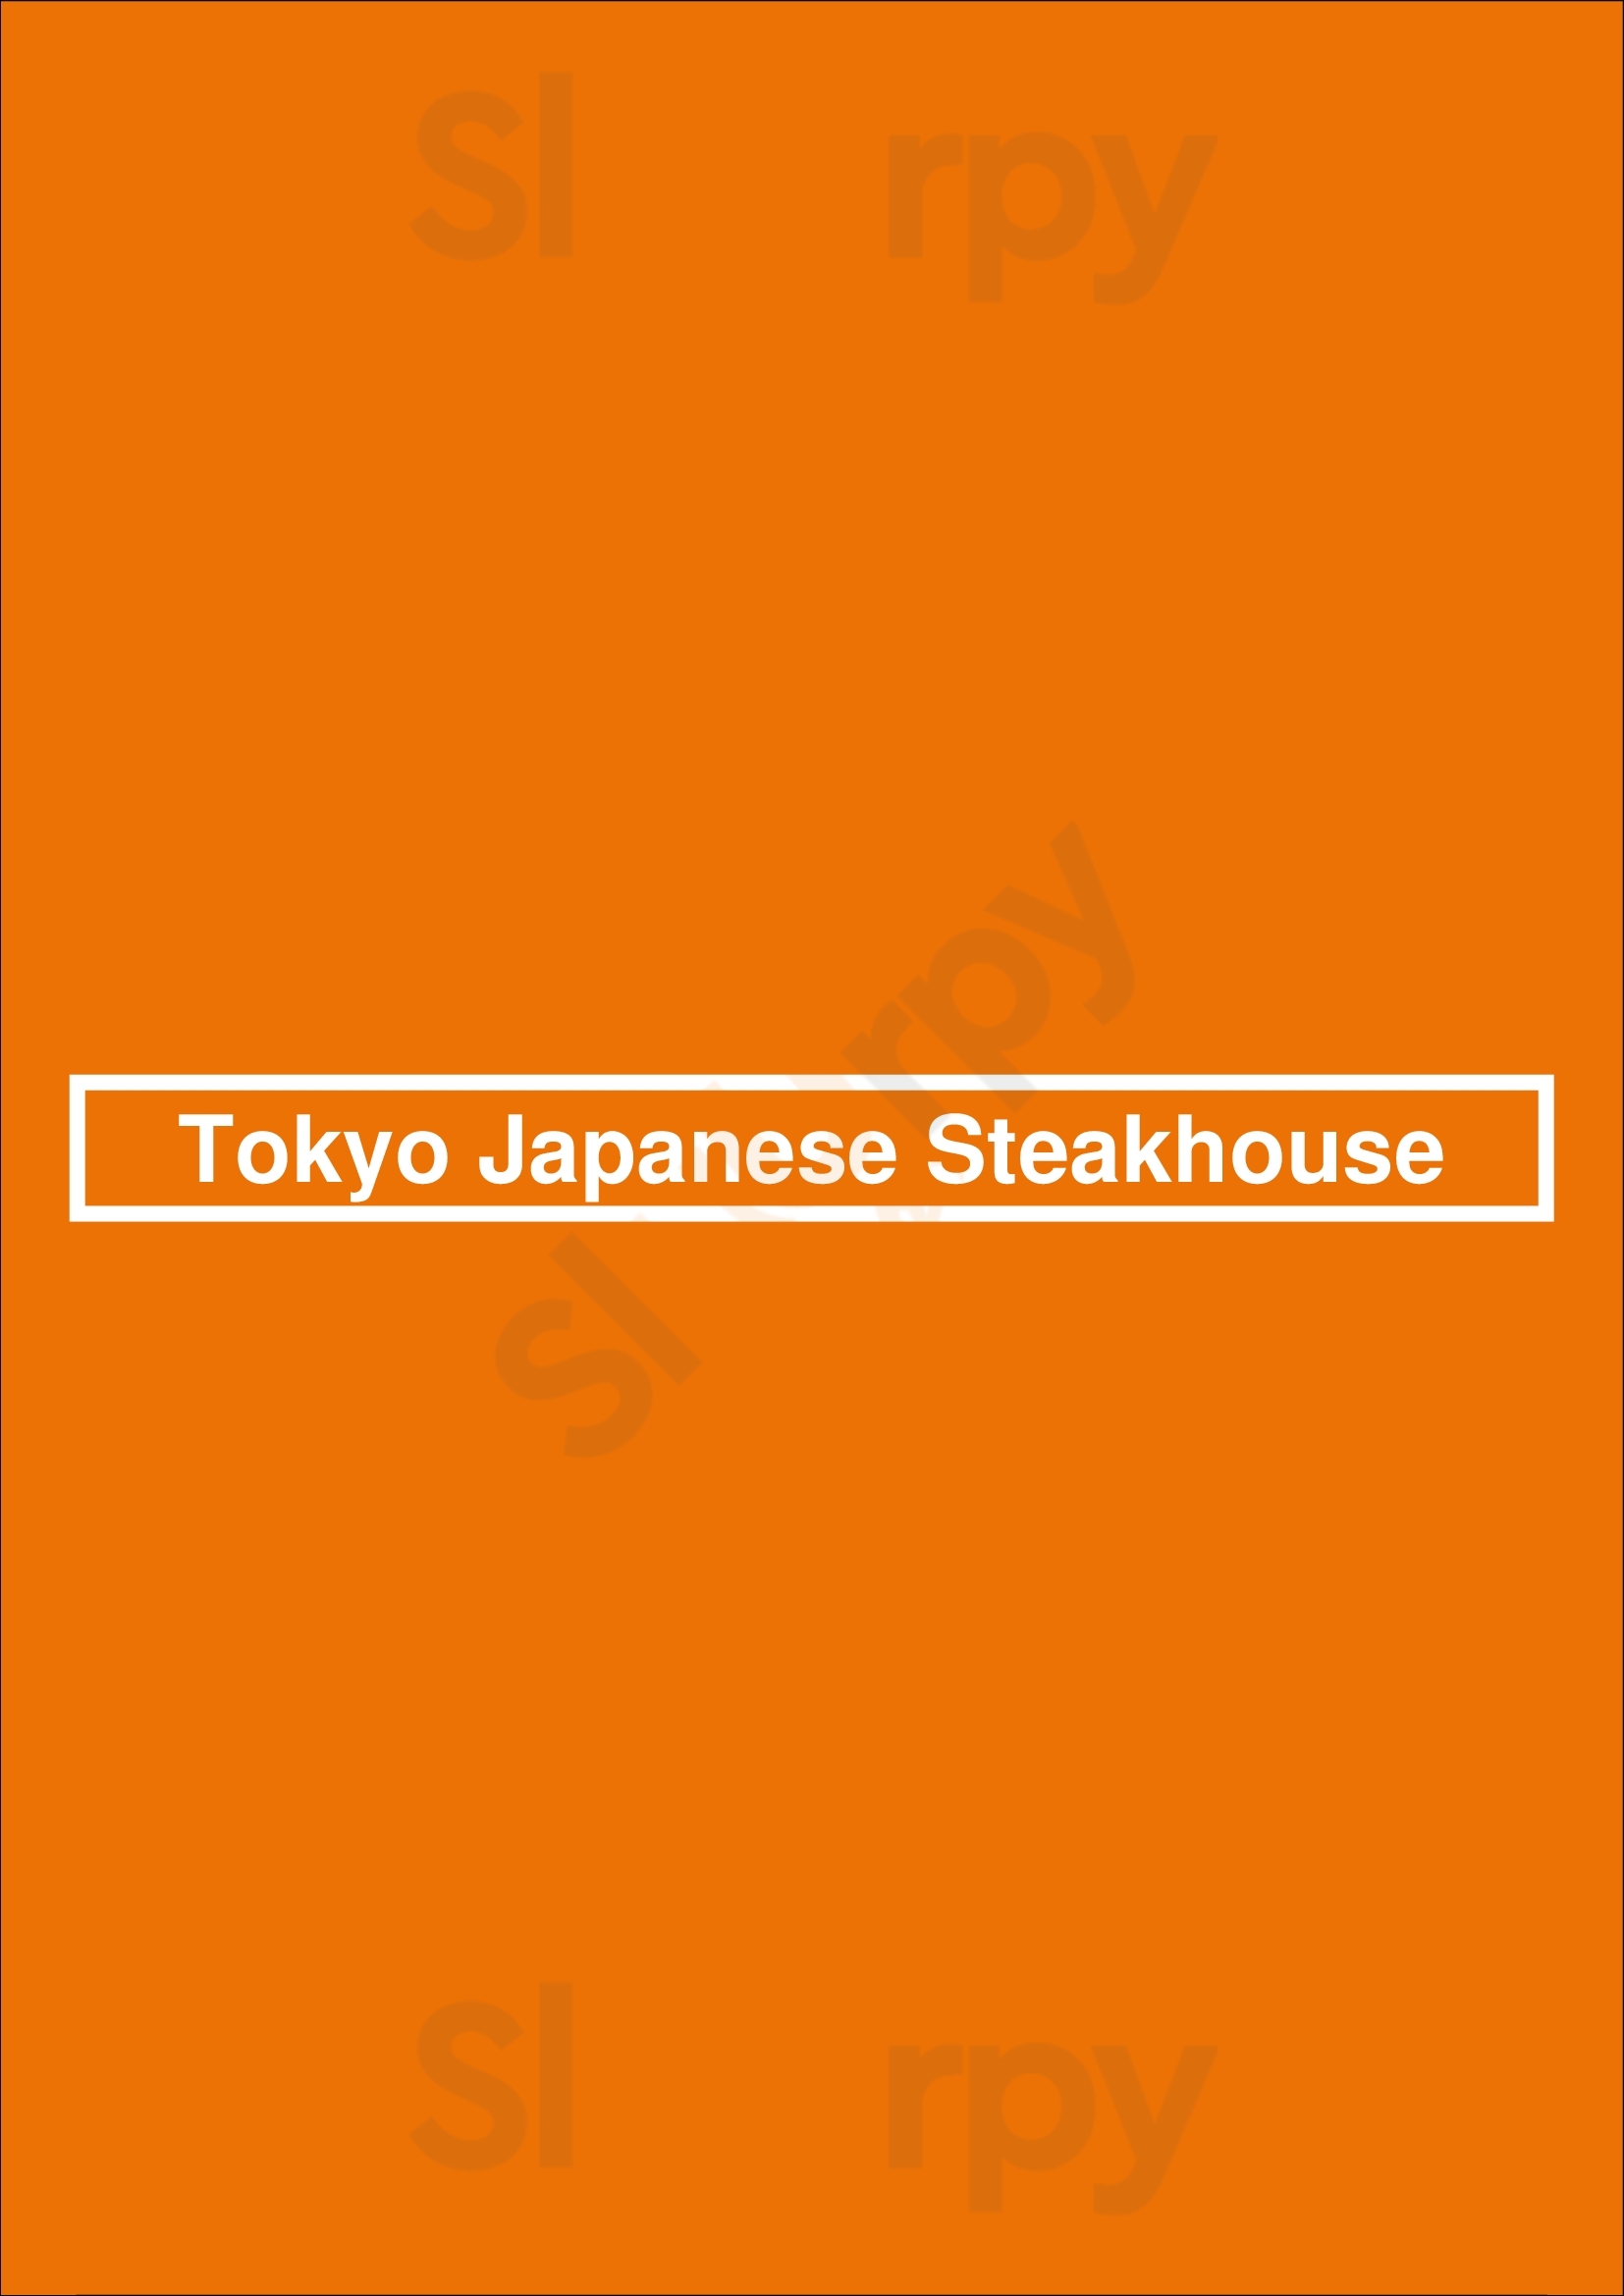 Tokyo Japanese Steakhouse Alexandria Menu - 1